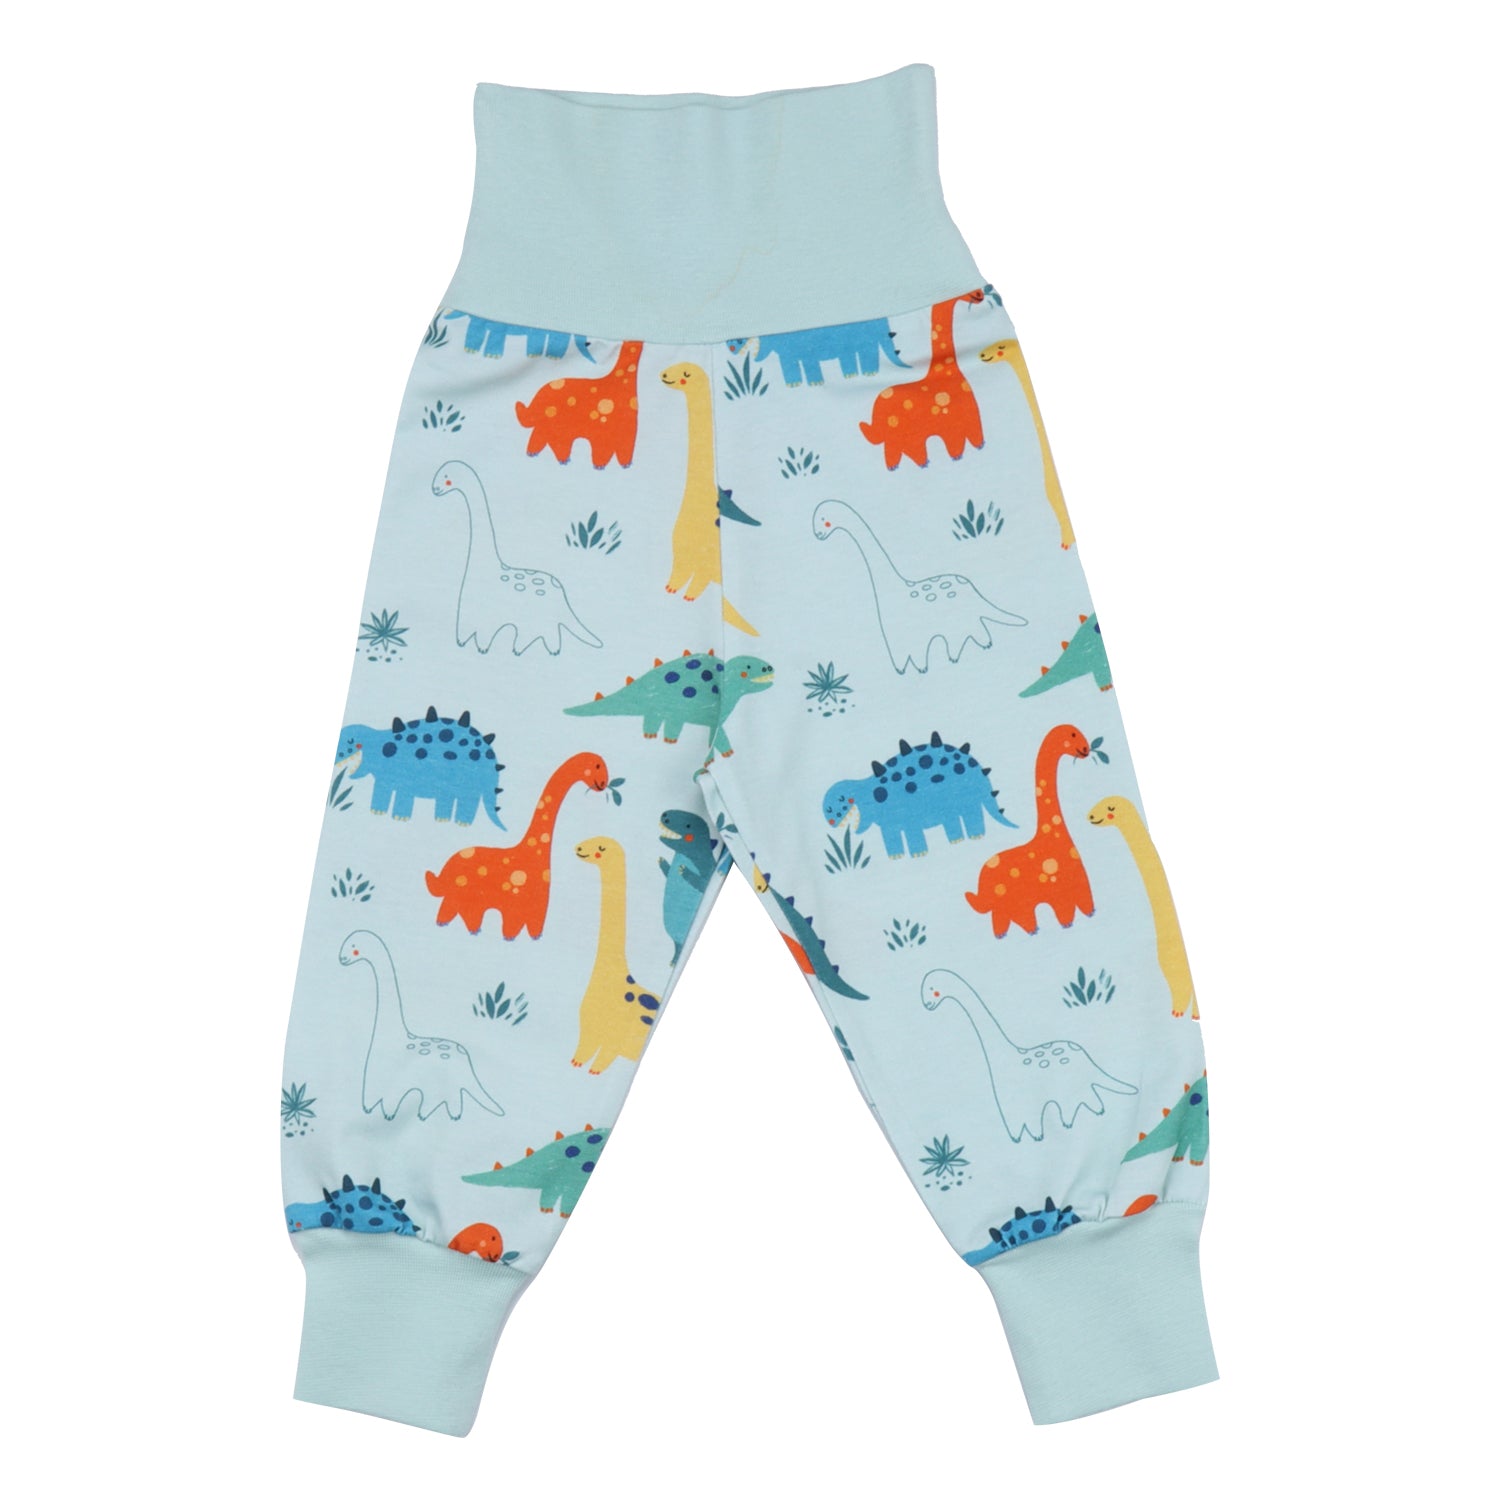 Walkiddy organic Pants- baby dinosaurs